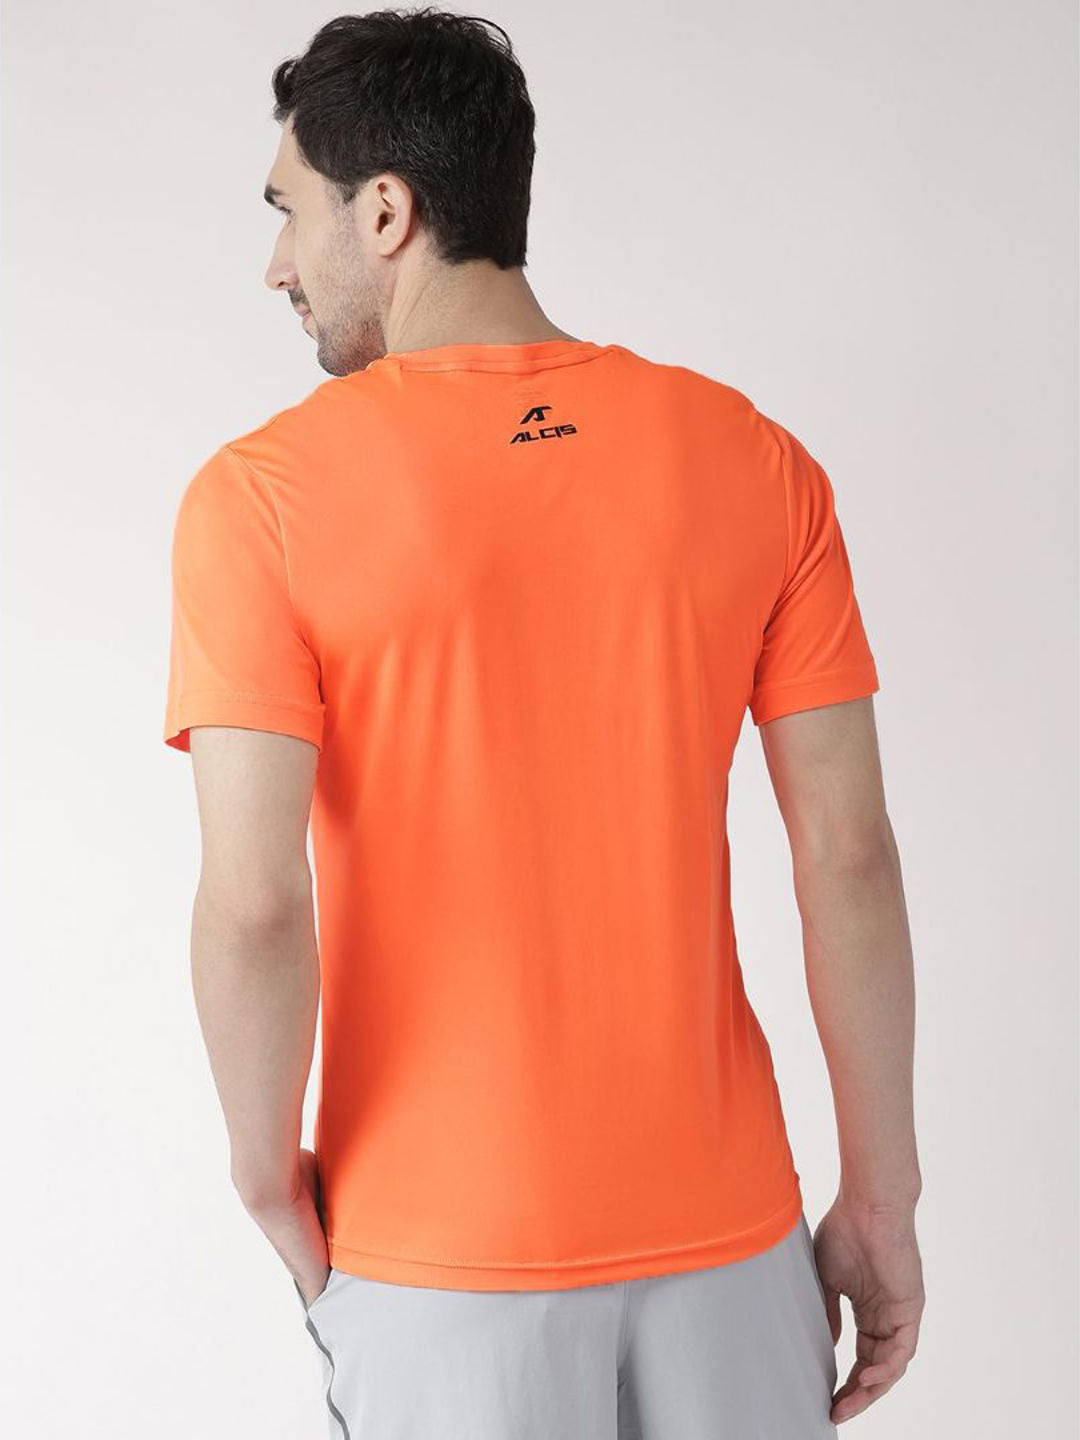 adidas, Tops, Neon Orange Adidas T Shirt